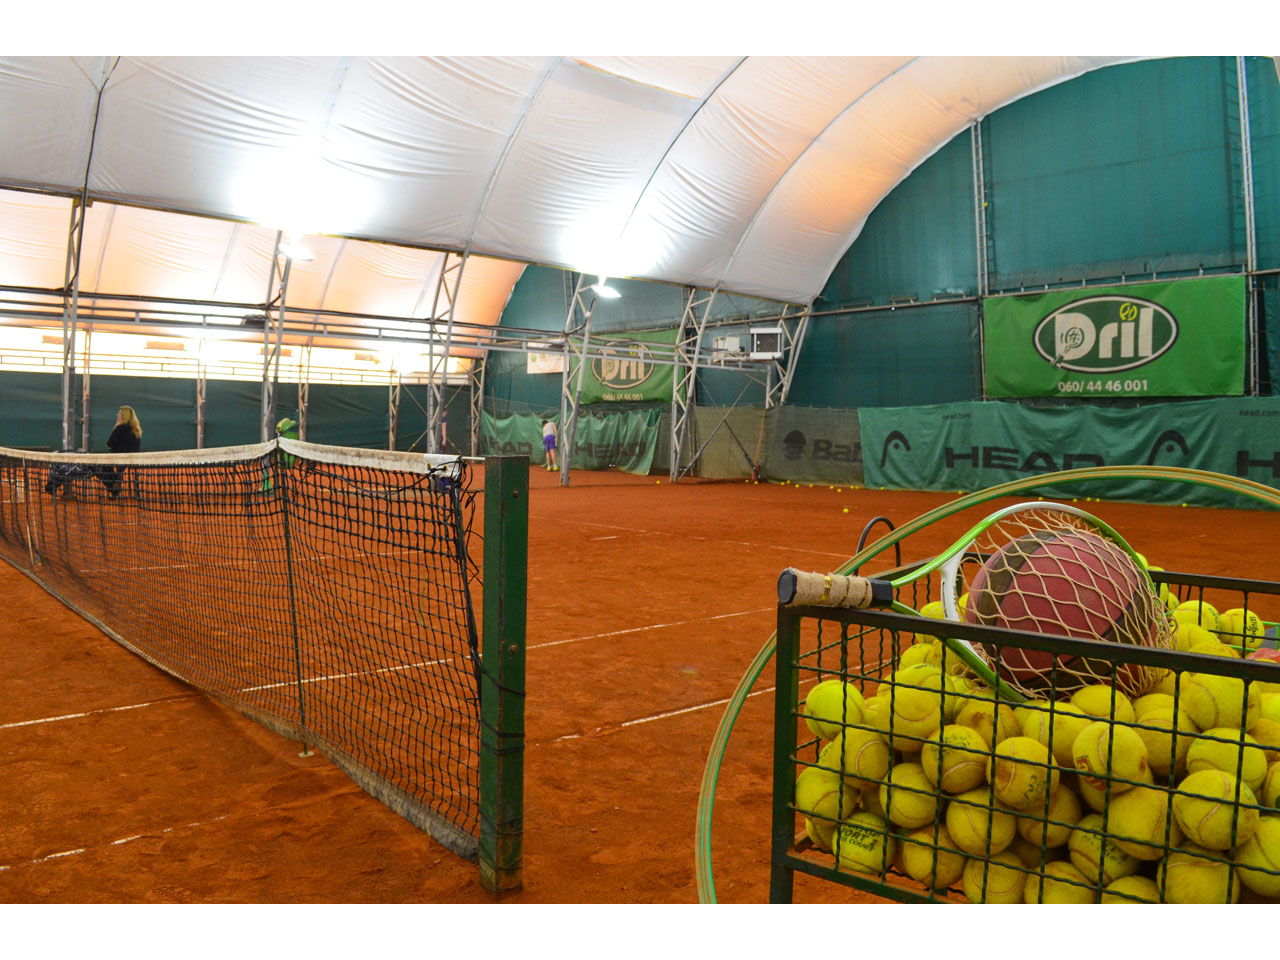 DRIL TENNIS CLUB Tennis courts, tennis schools, tennis clubs Belgrade - Photo 7